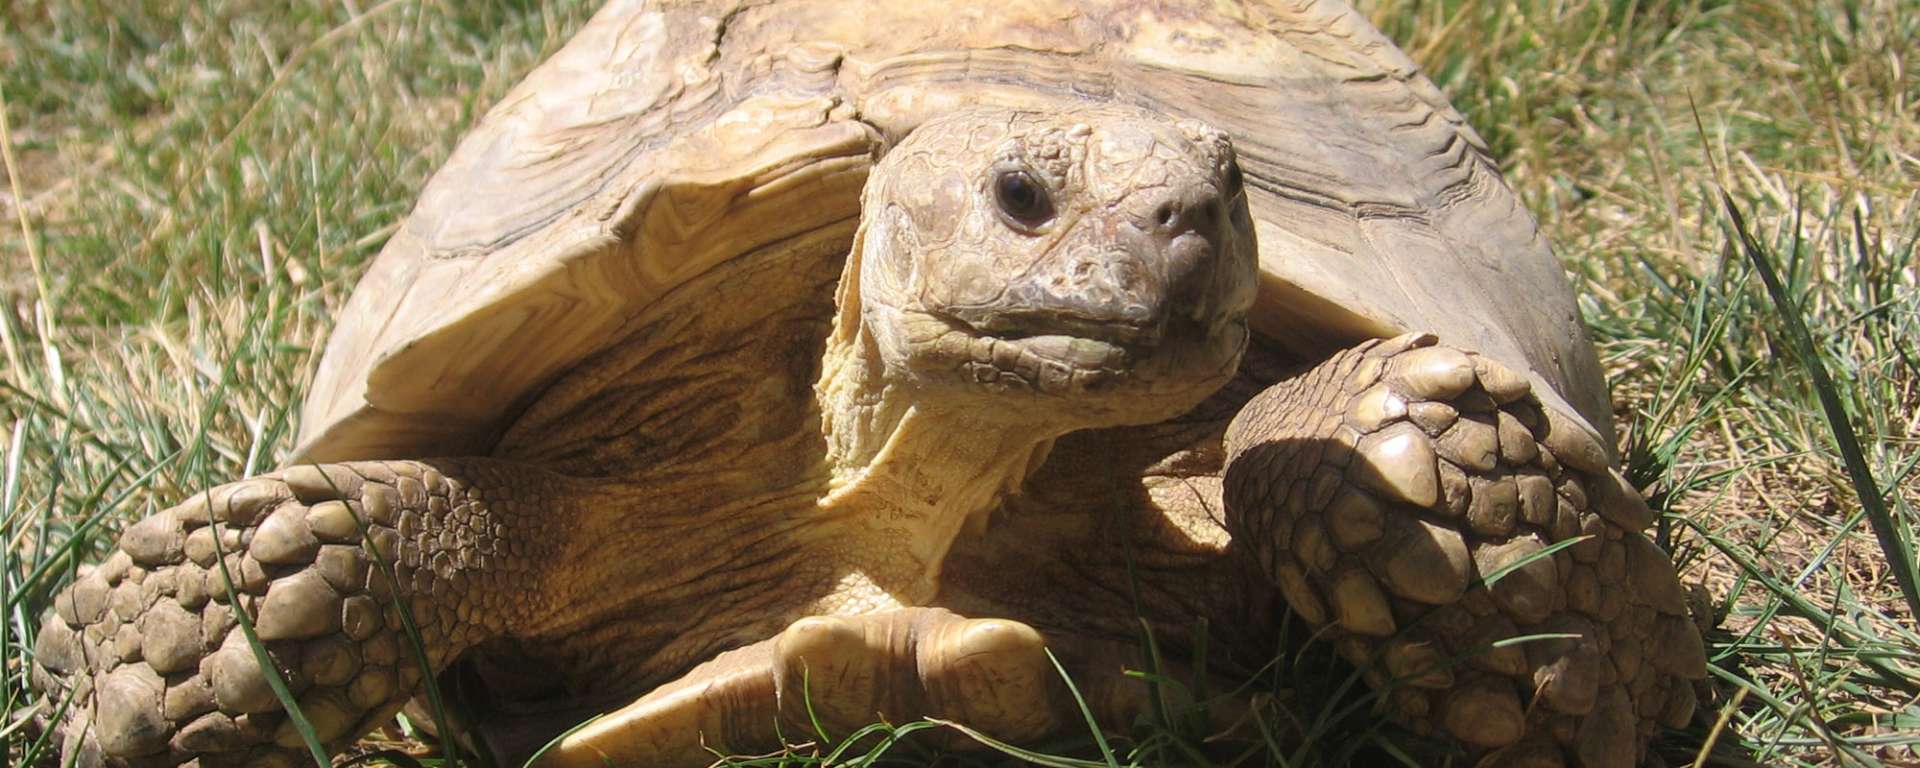 Sulcata Tortoise Safari Spotlight